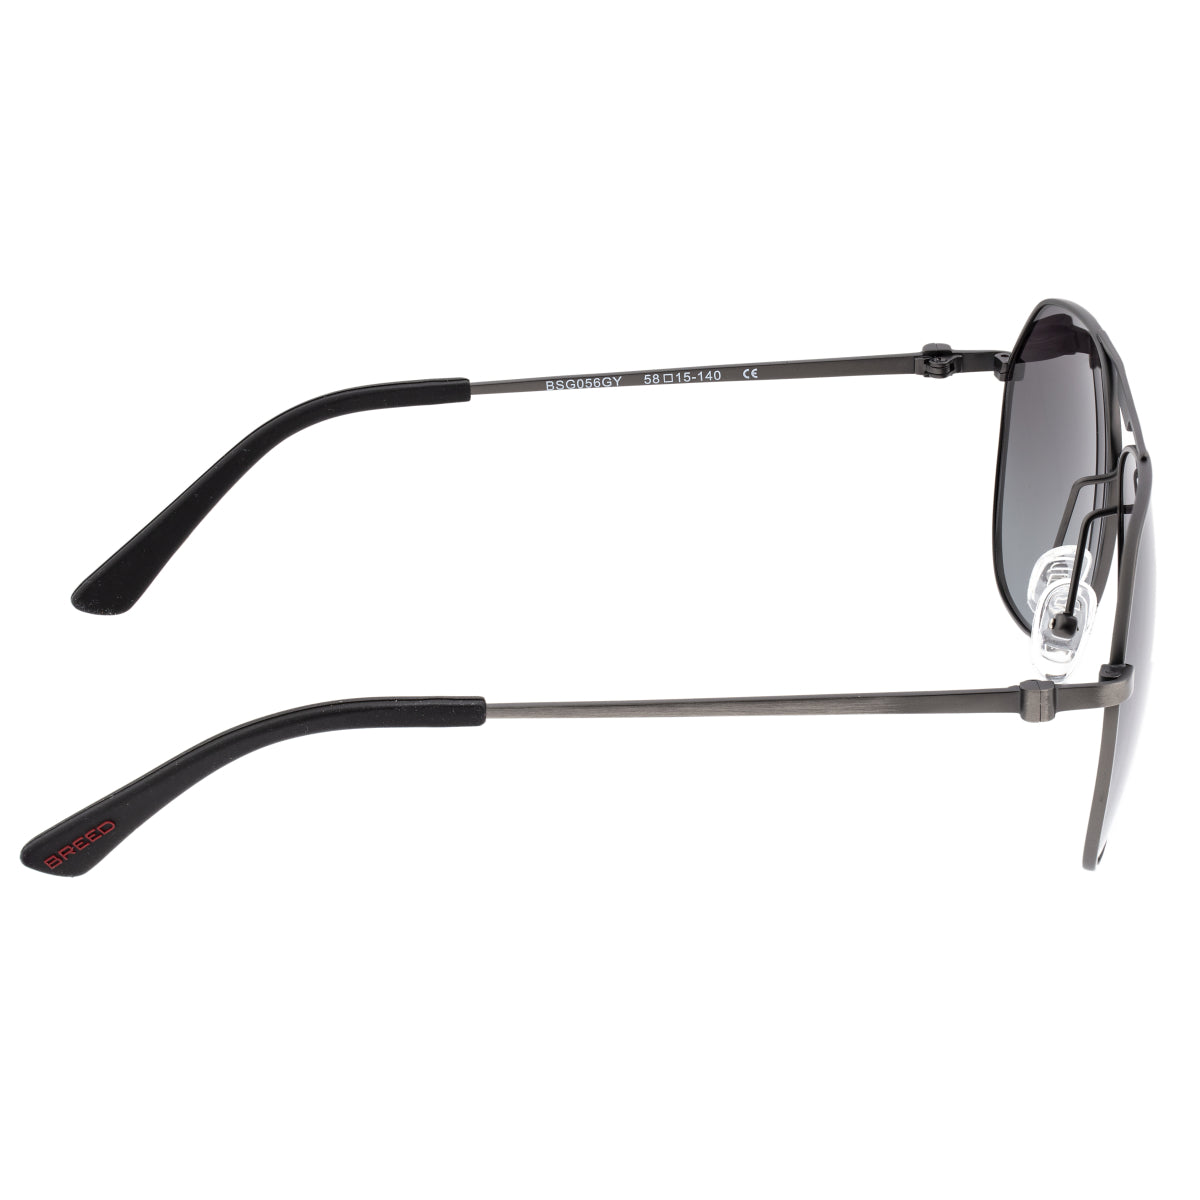 Breed Mount Titanium Polarized Sunglasses - Gunmetal/Black - BSG056GY